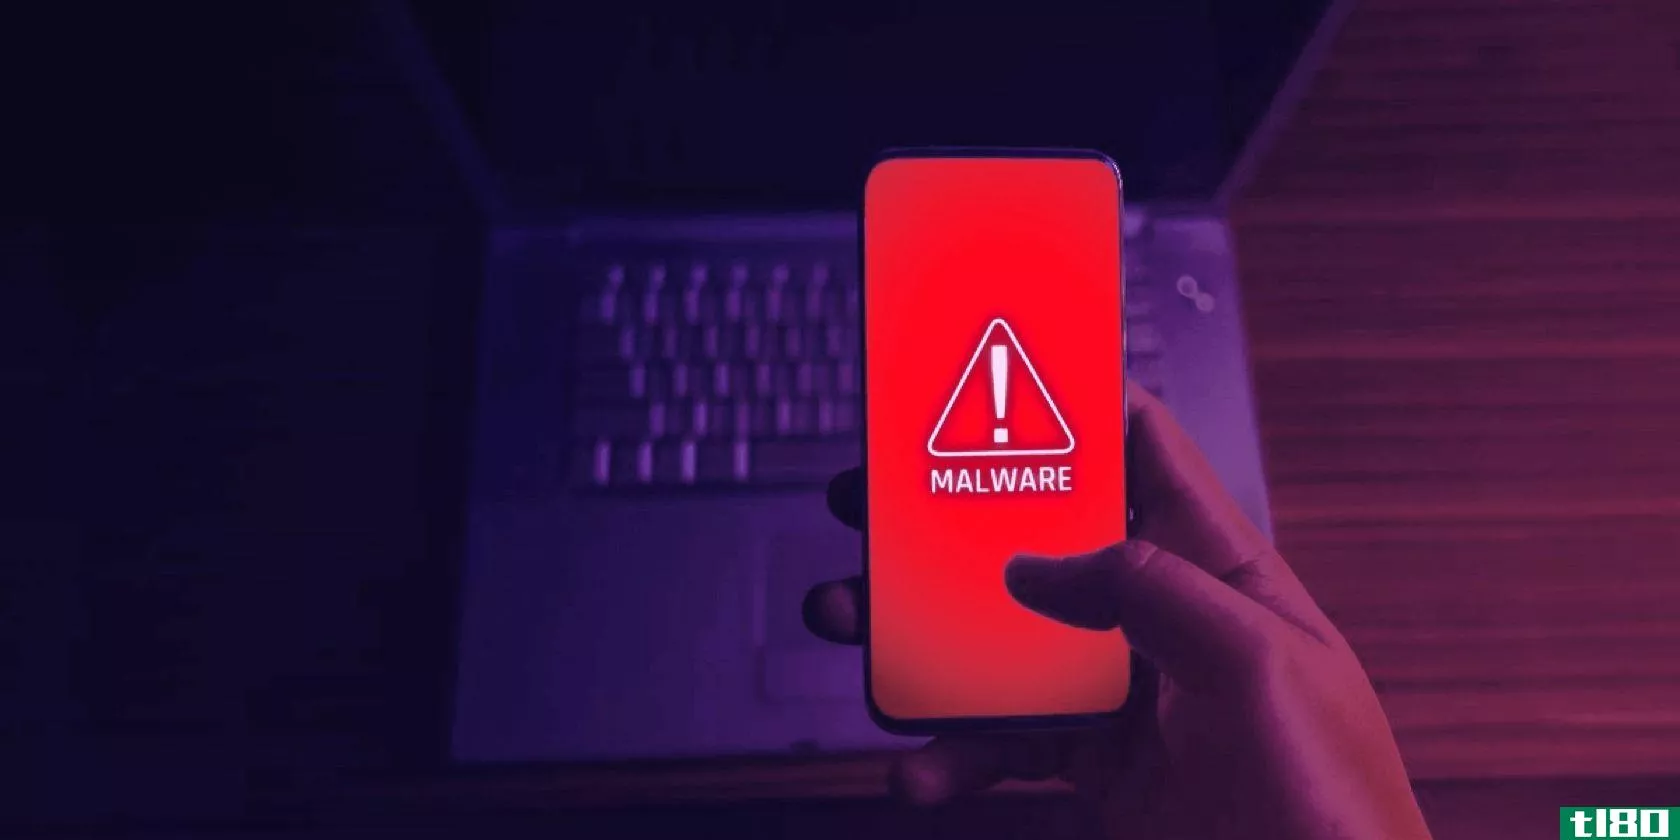 Phone in hand displaying warning